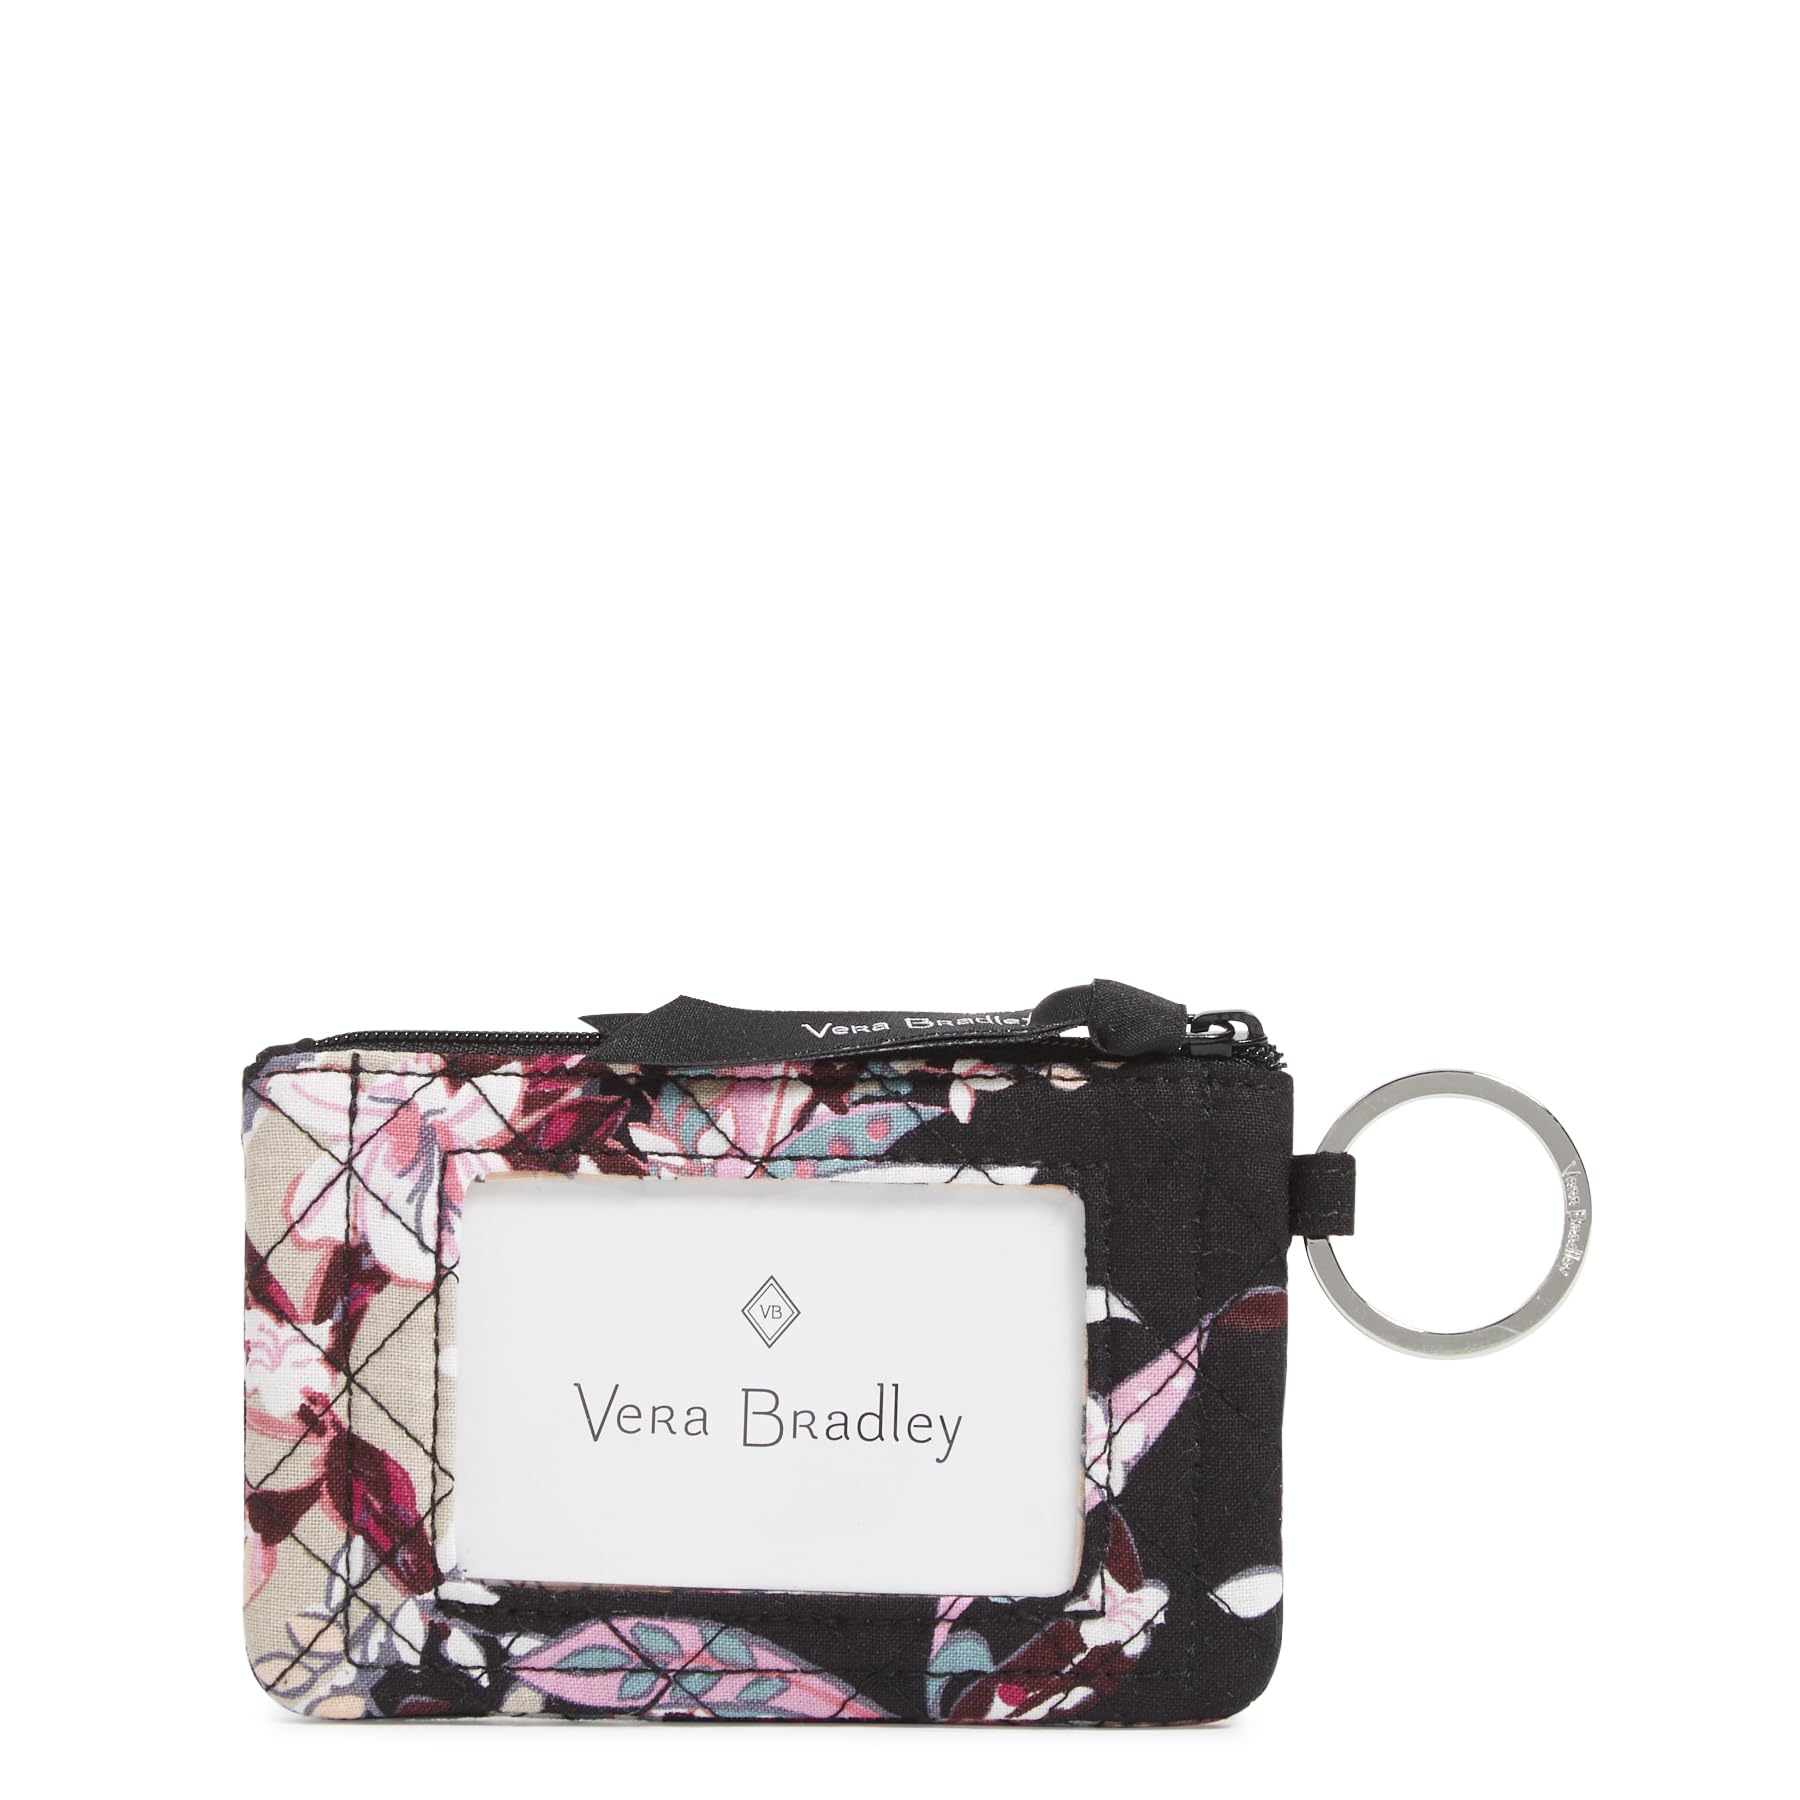 Vera Bradley Women's Cotton Zip Id Case Wallet, Botanical Paisley, One Size